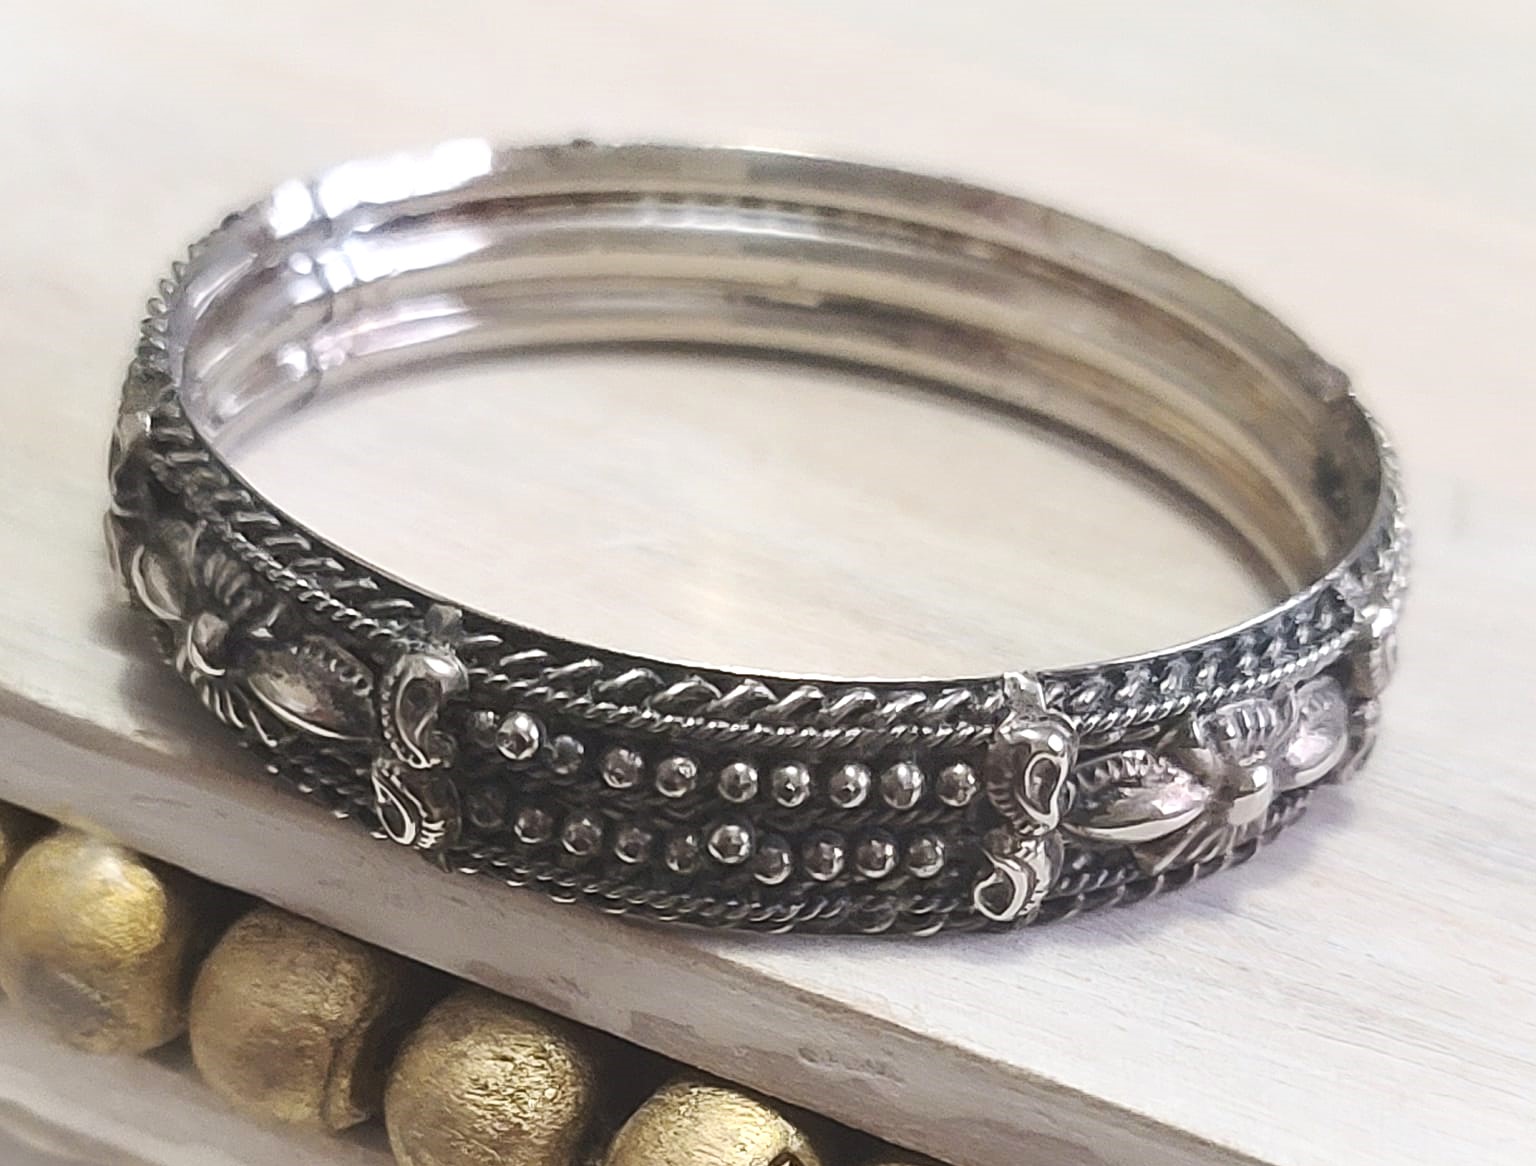 Gothic bracelet, vintage, intracate detailed bangle bracelet